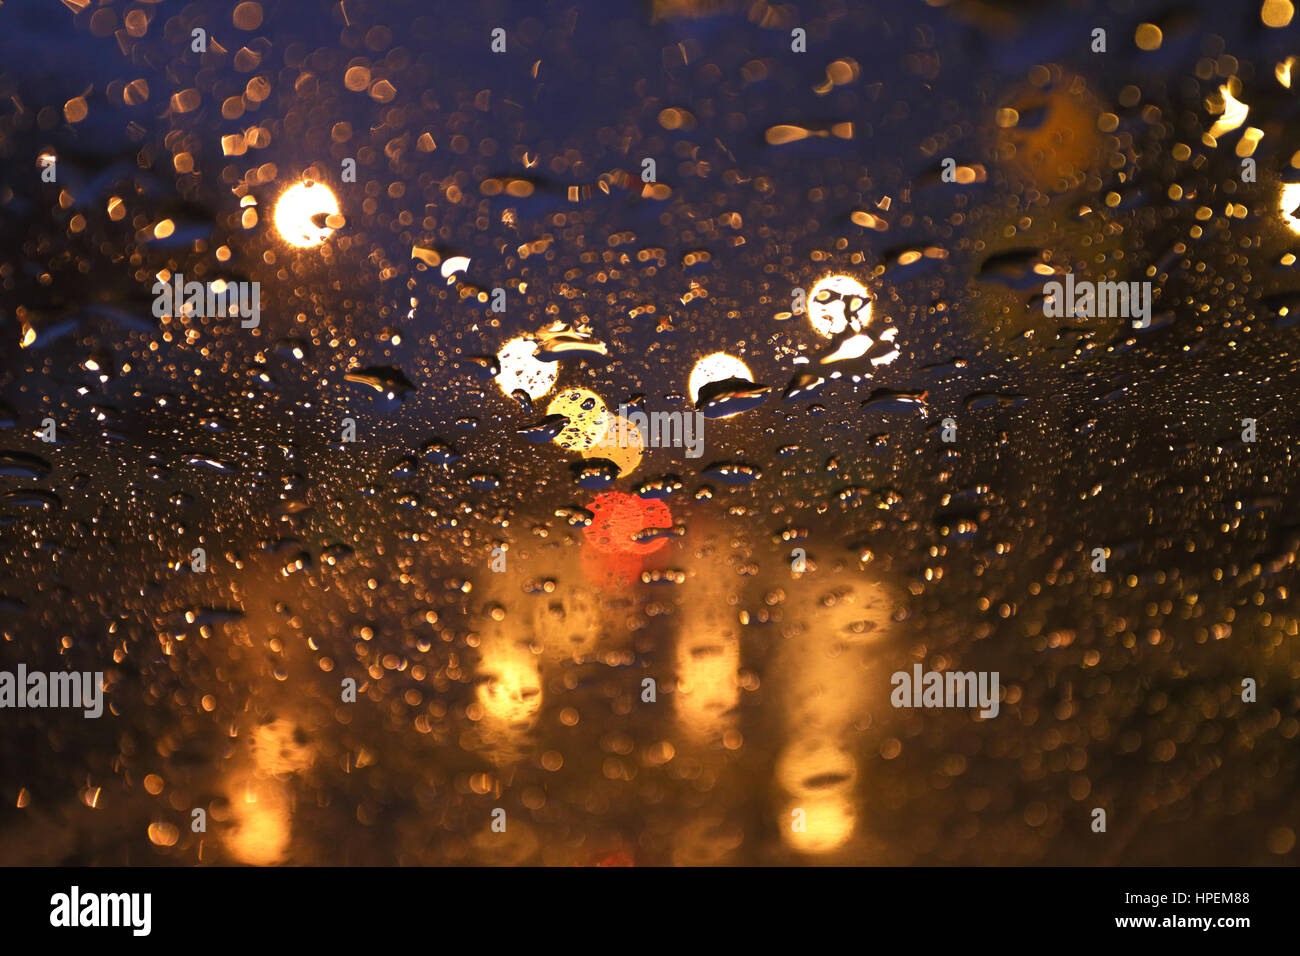 street blurred rain background view through wet car window Stock Photo